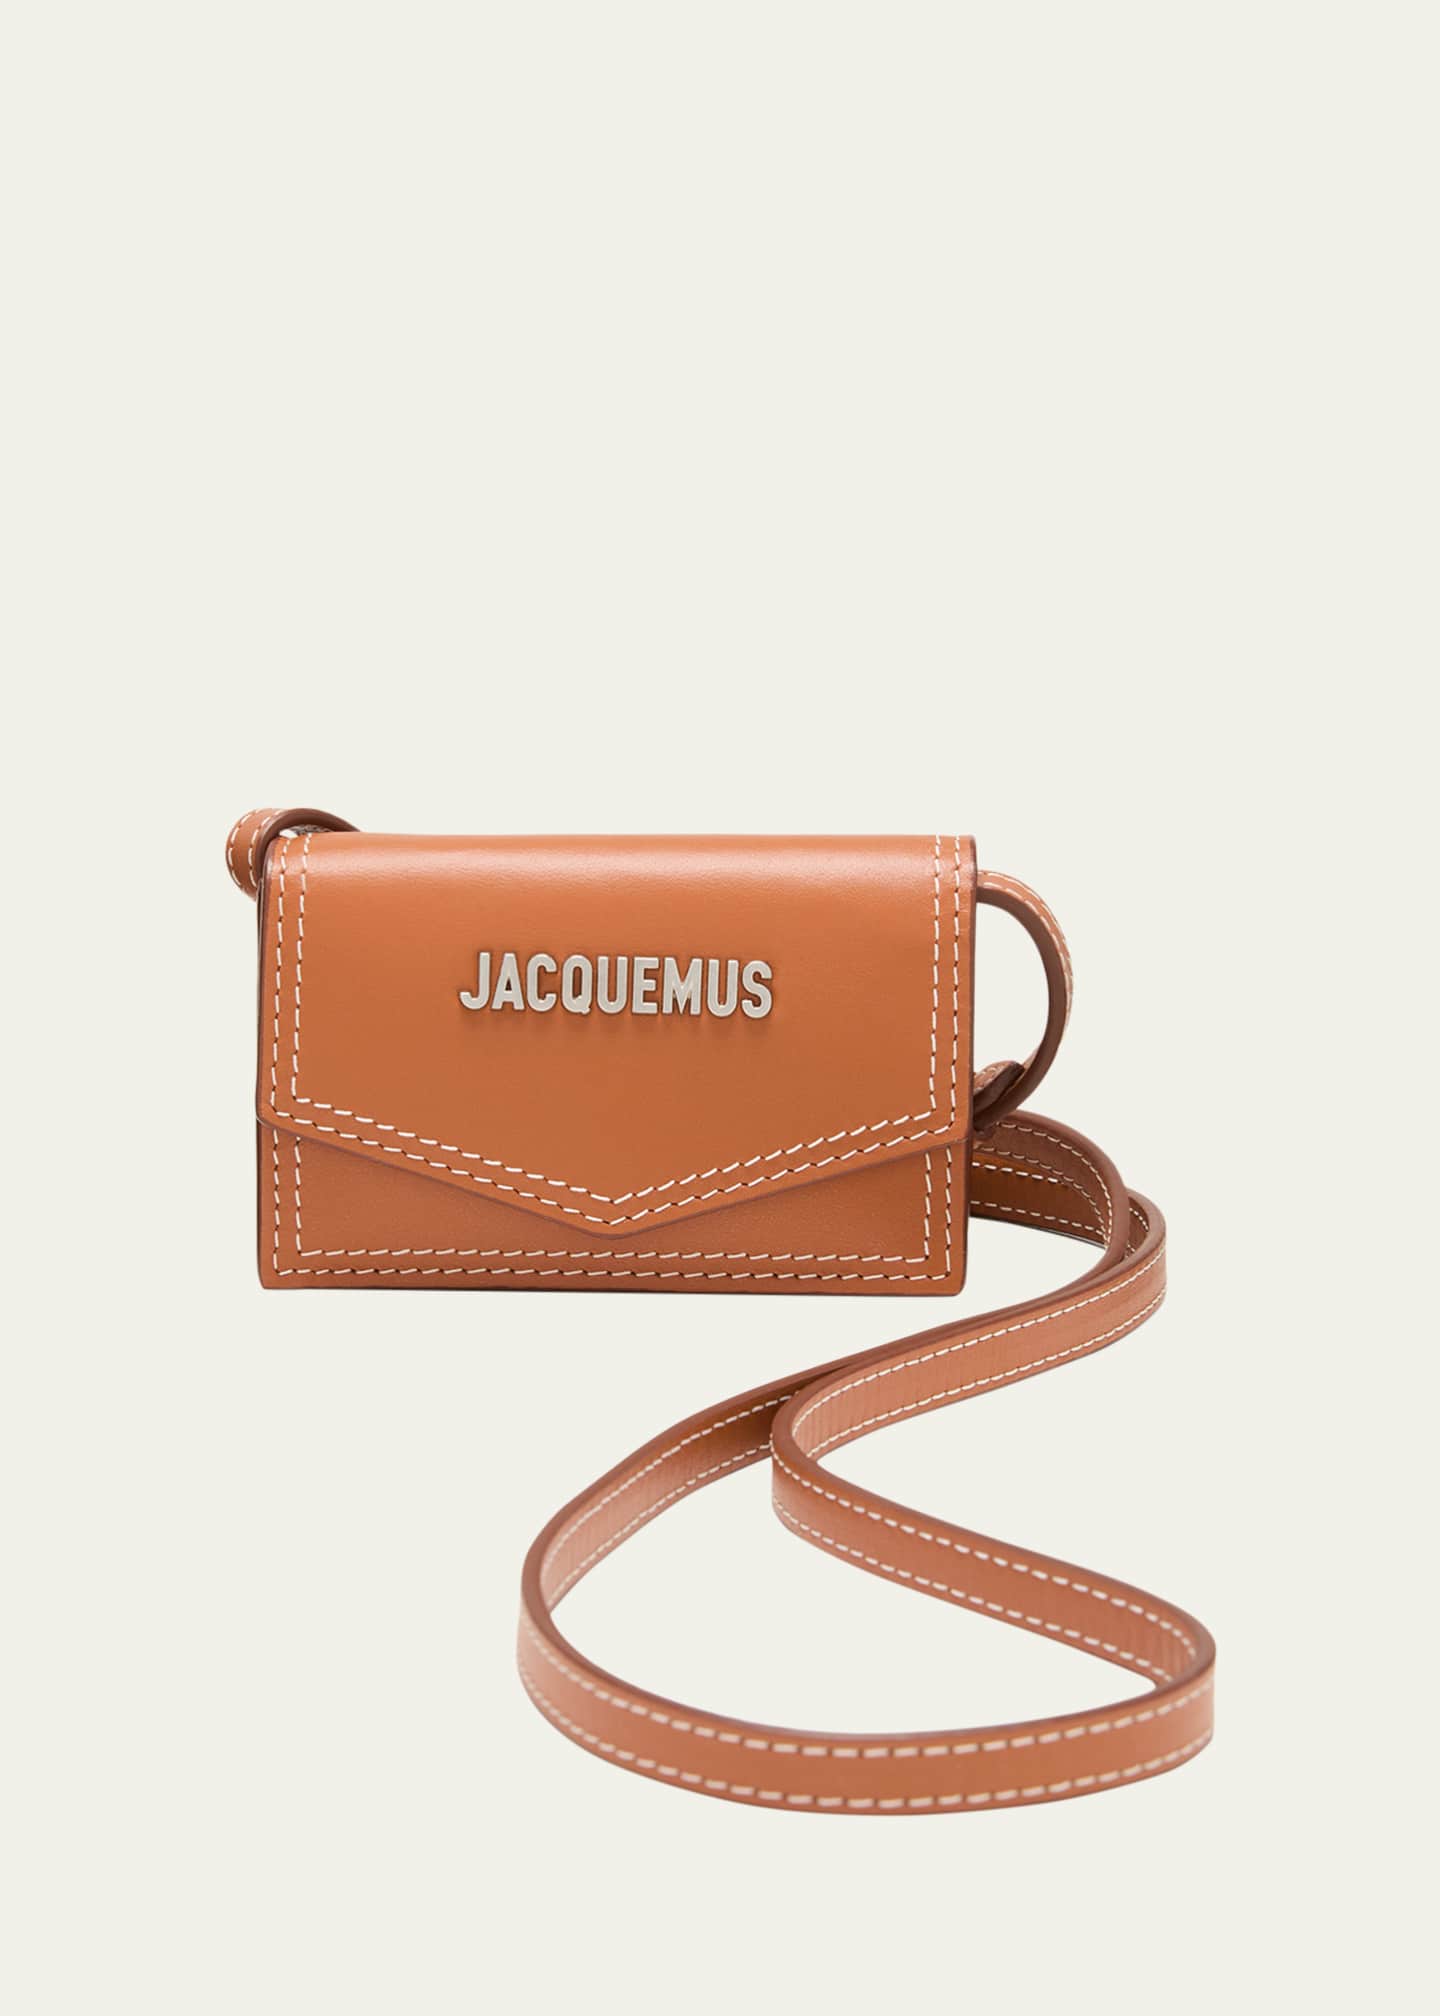 jacquemus card holder